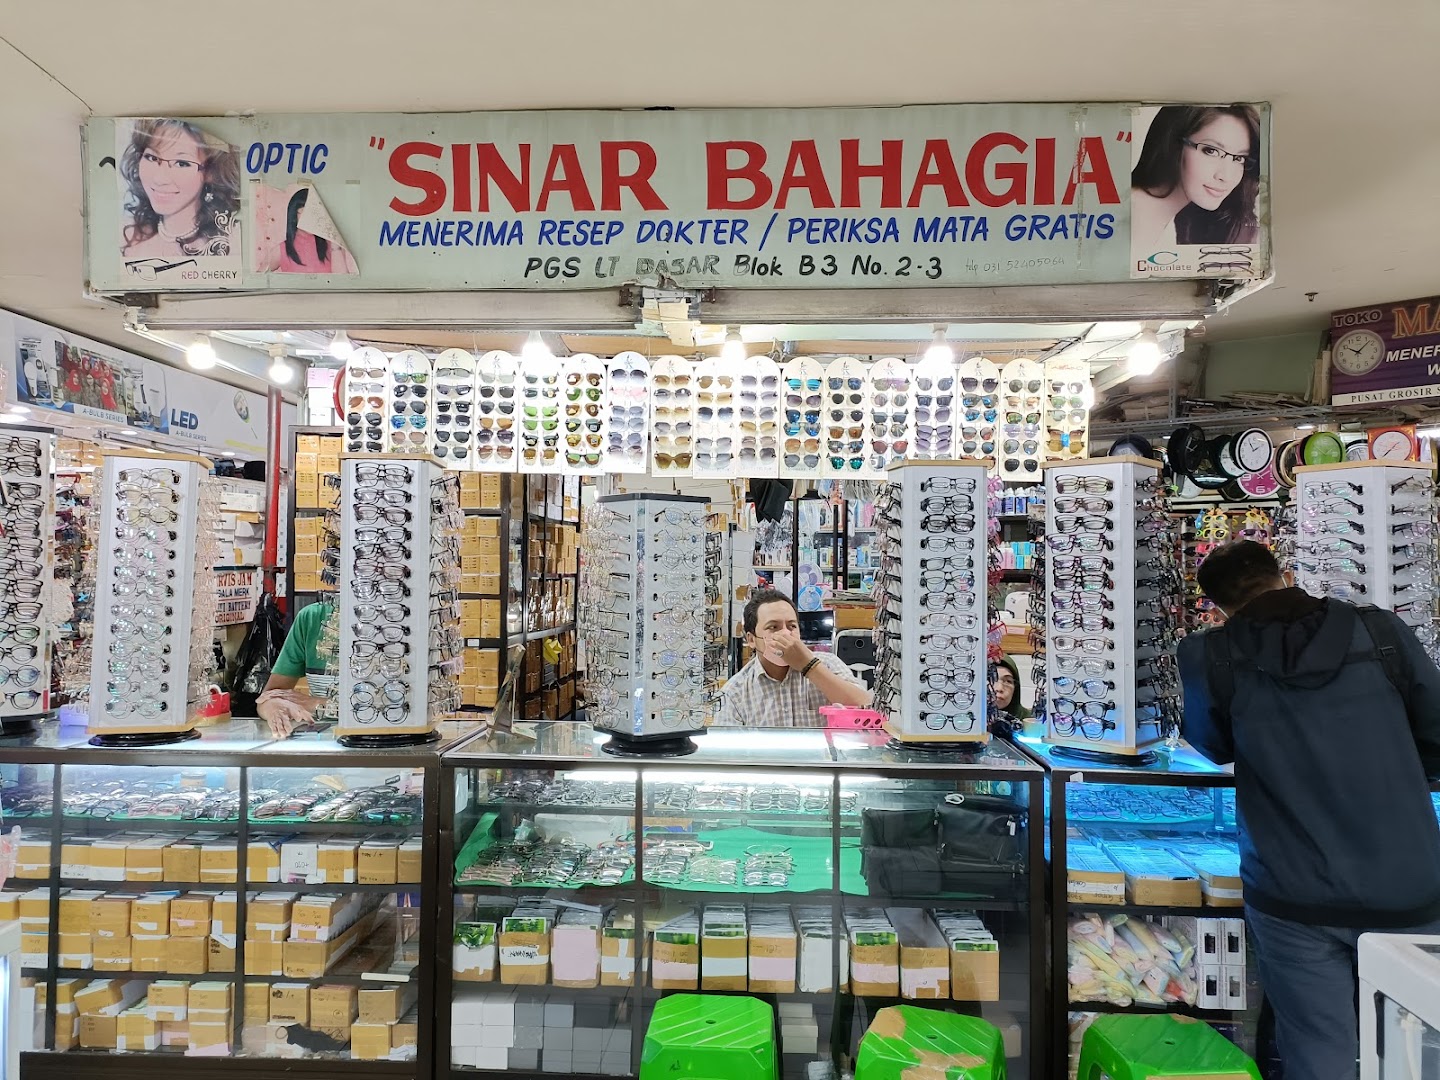 Optic Sinar Bahagia Pusat Grosir Surabaya Photo